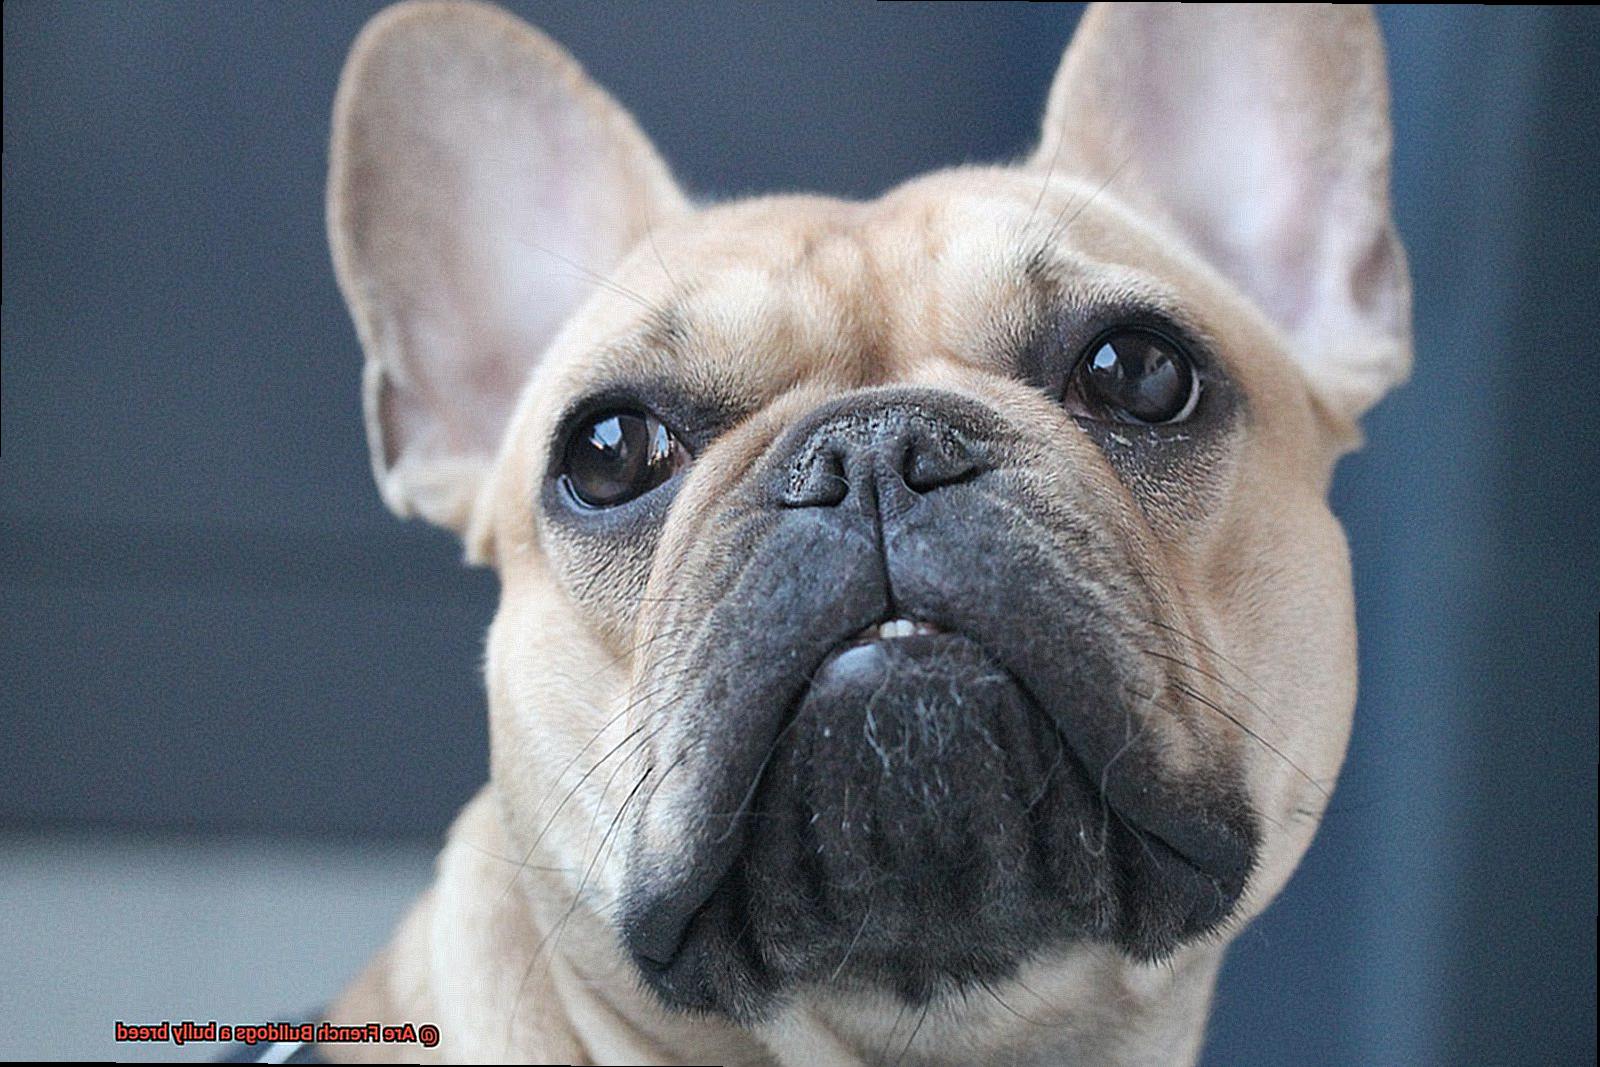 Are French Bulldogs a bully breed? – Allfrbulldogs.com